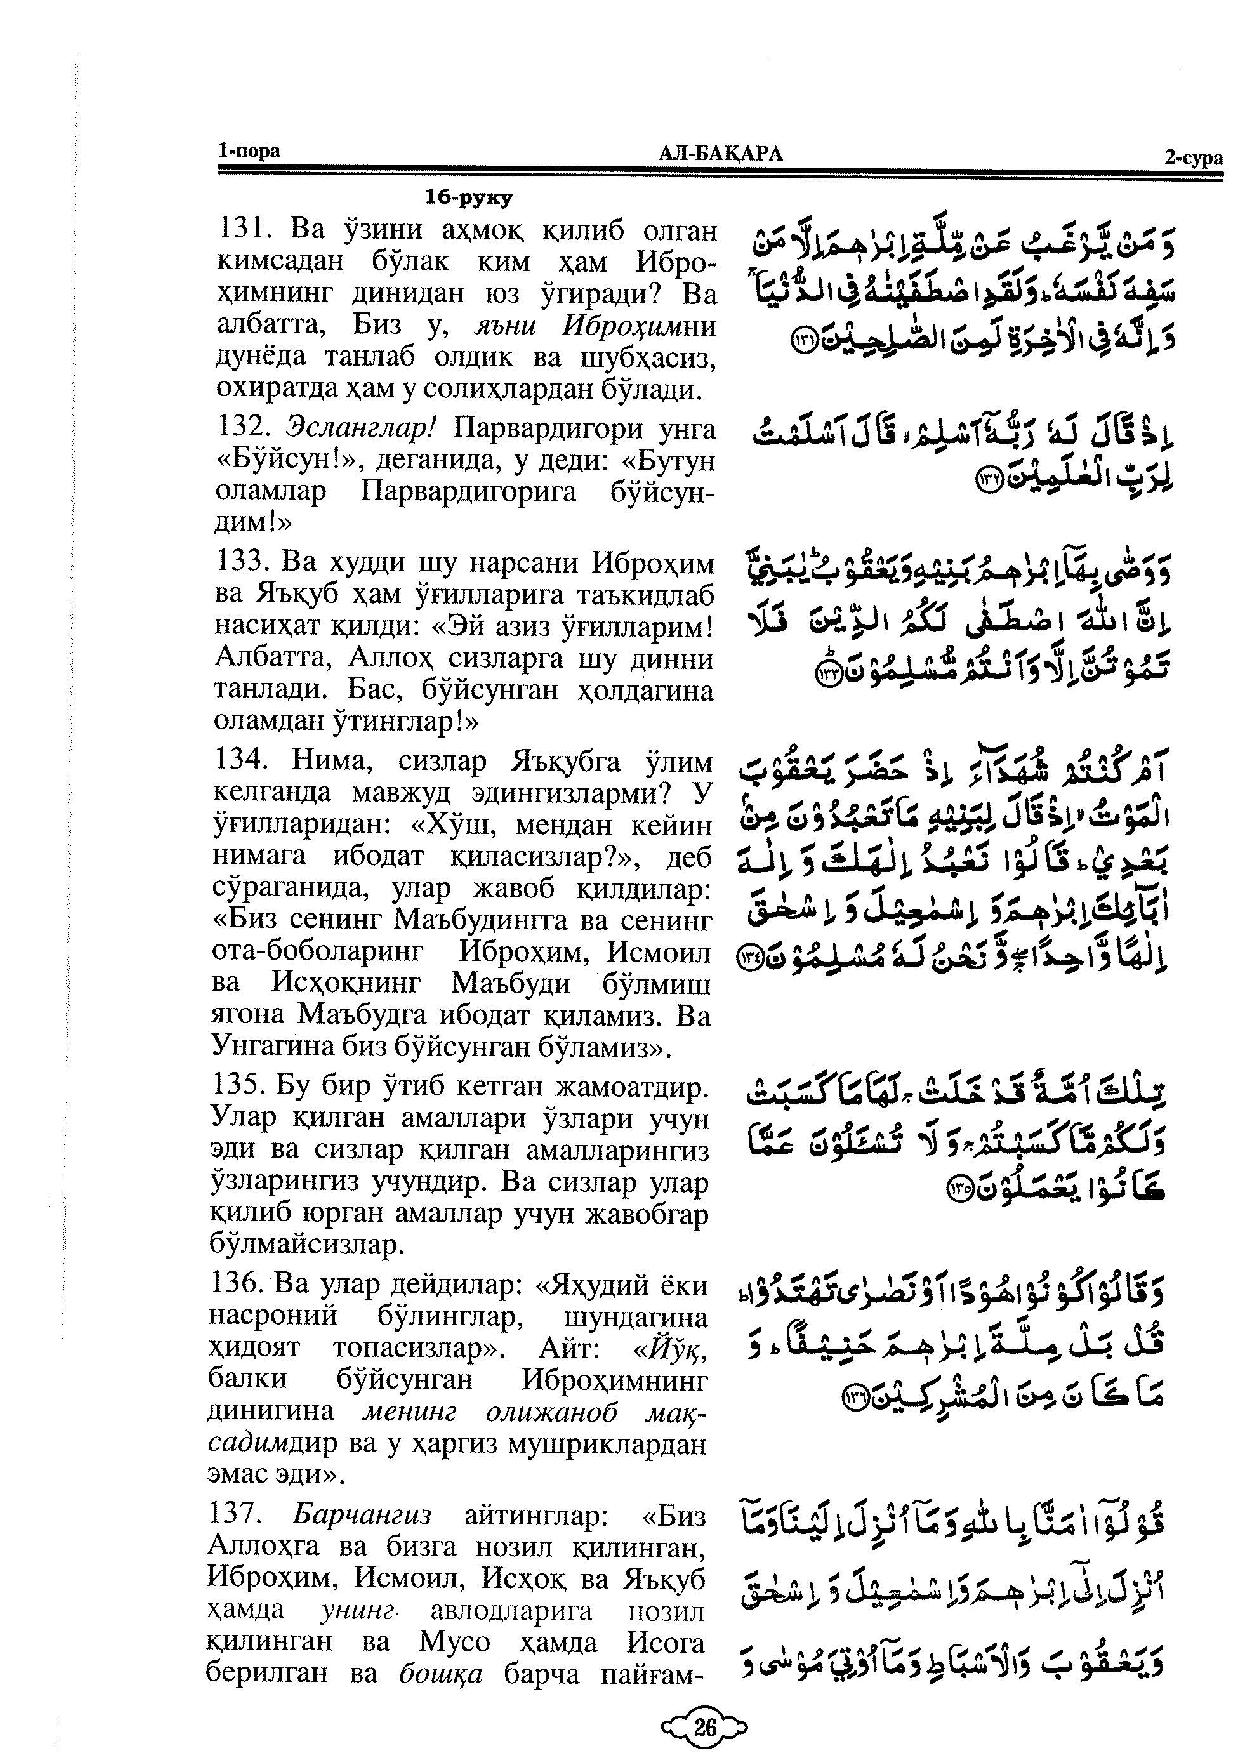 002-al-baqarah-page-024